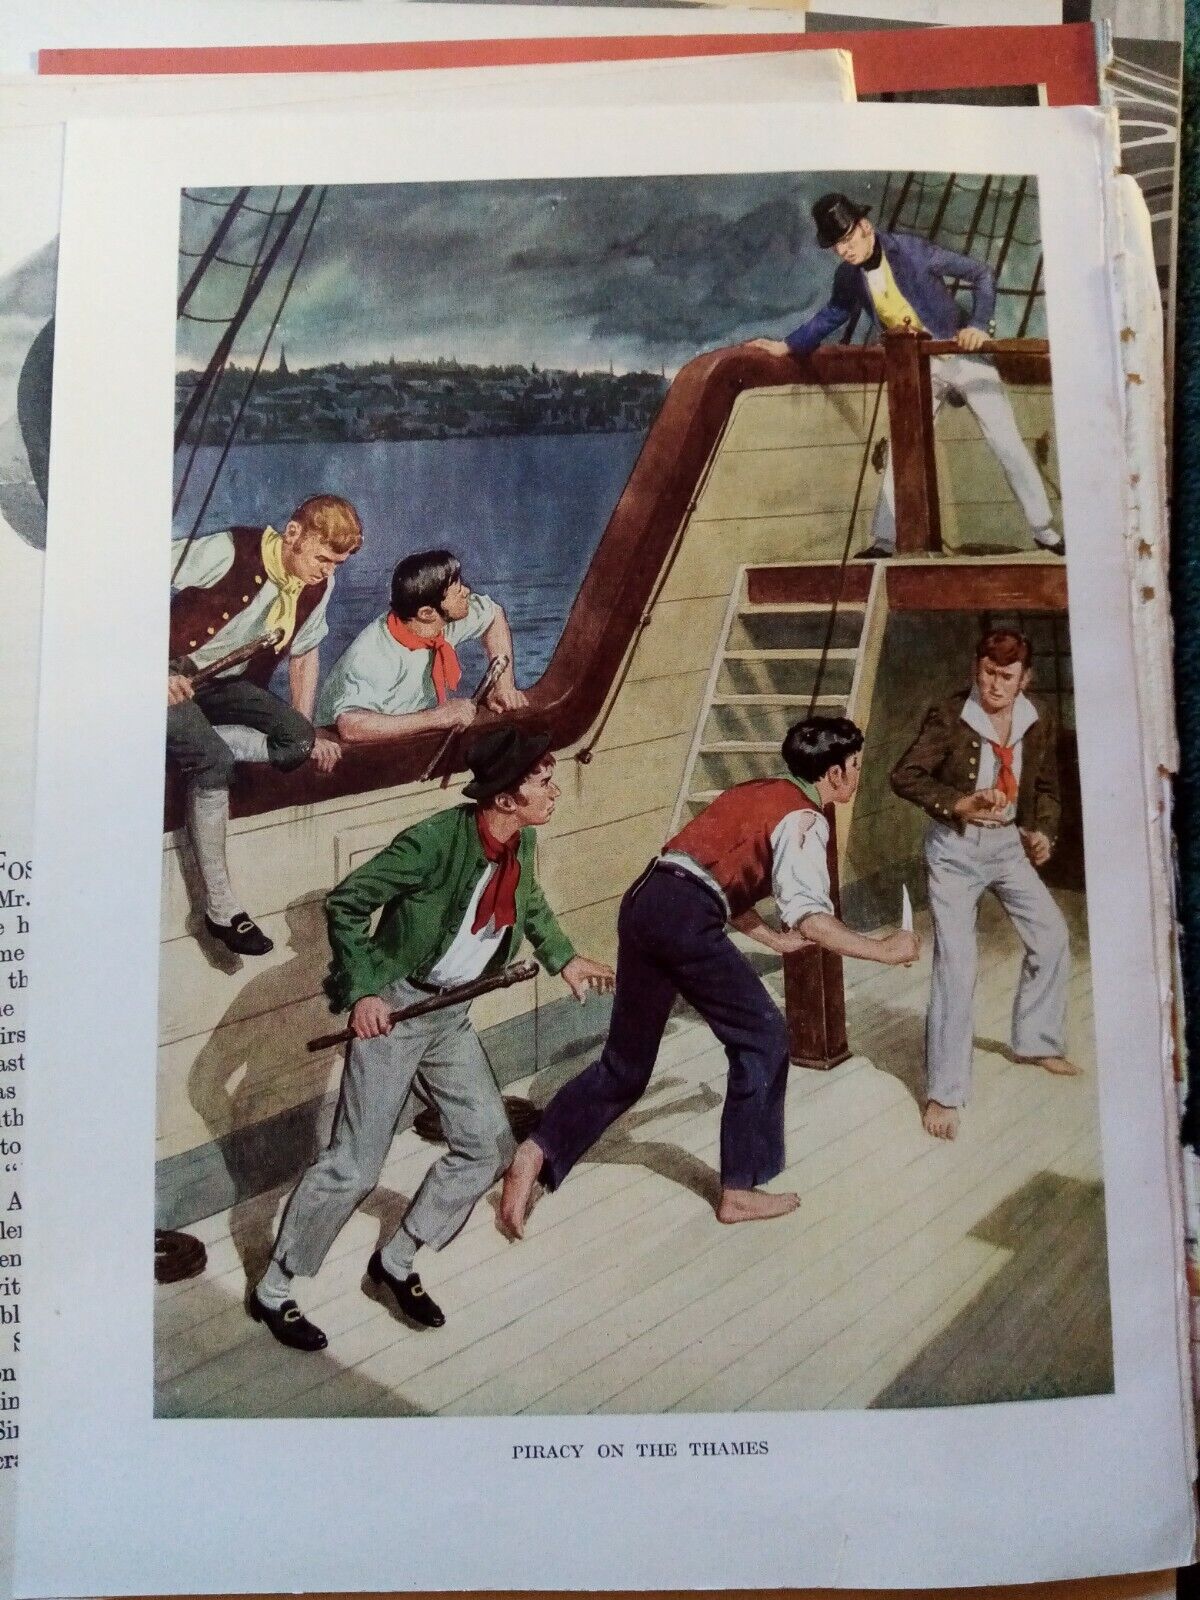 Kvc25 Ephemera 1950s book picture piracy on the Thames 